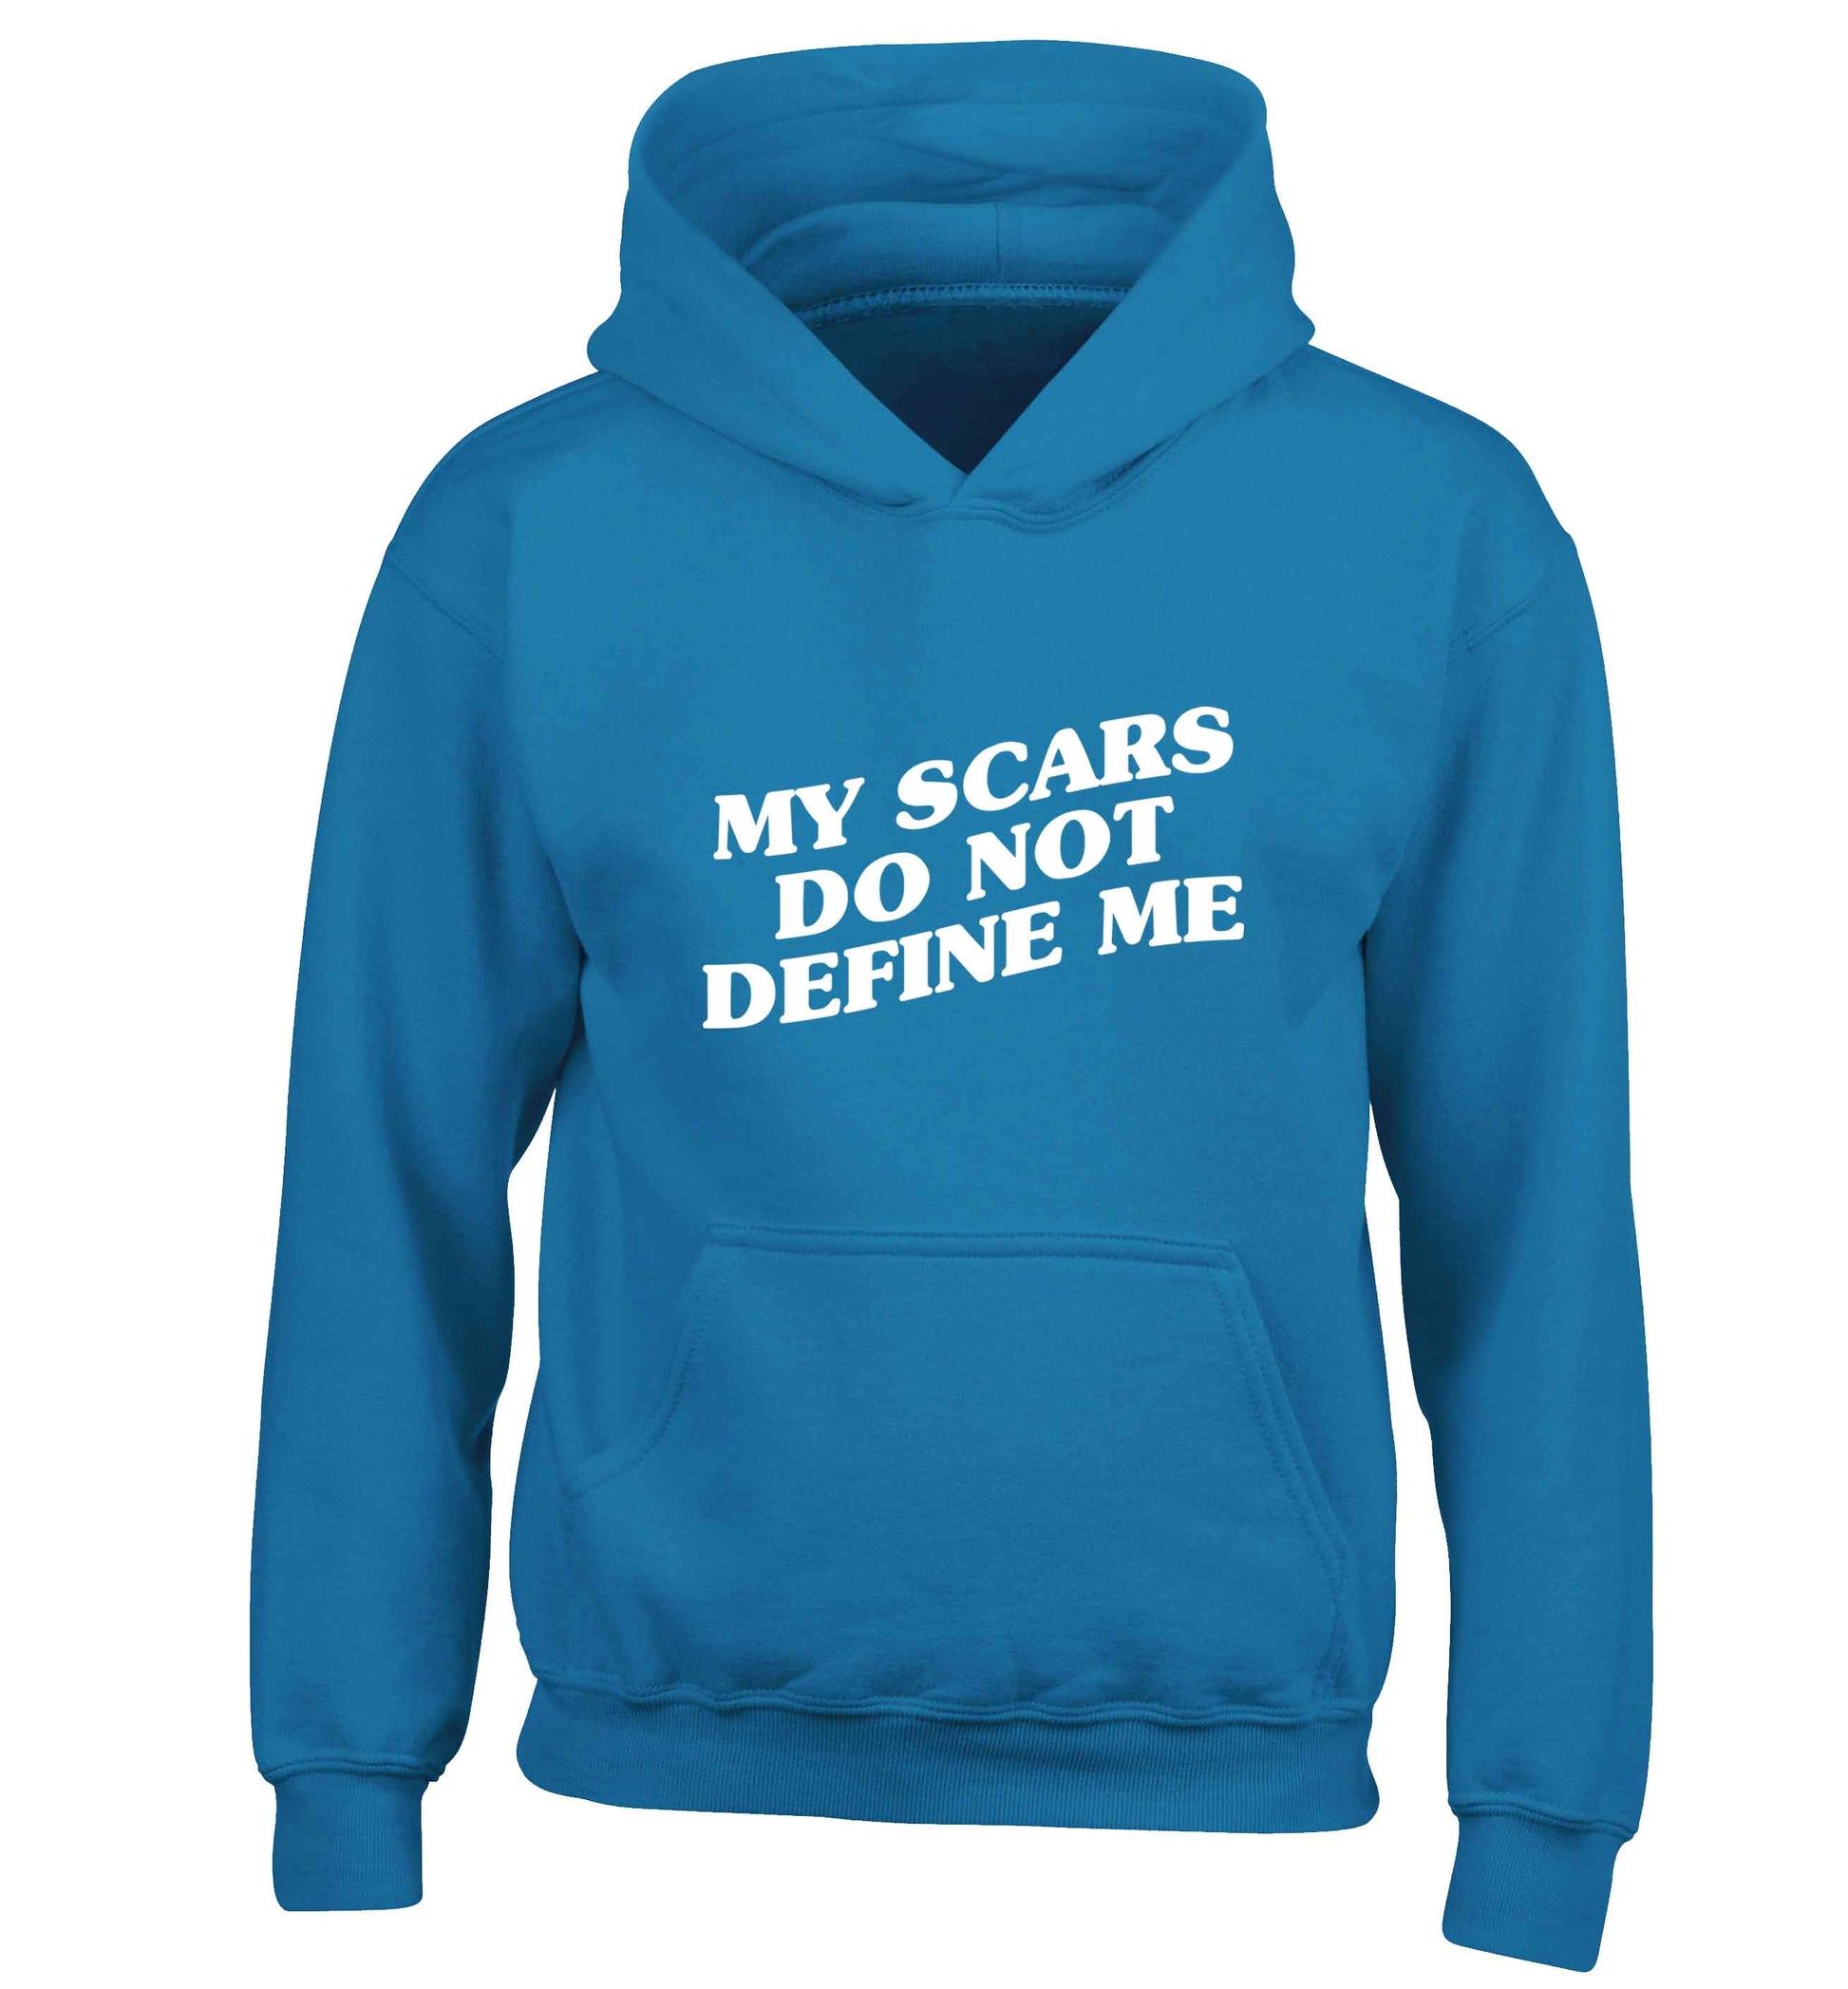 My scars do not define me children's blue hoodie 12-13 Years